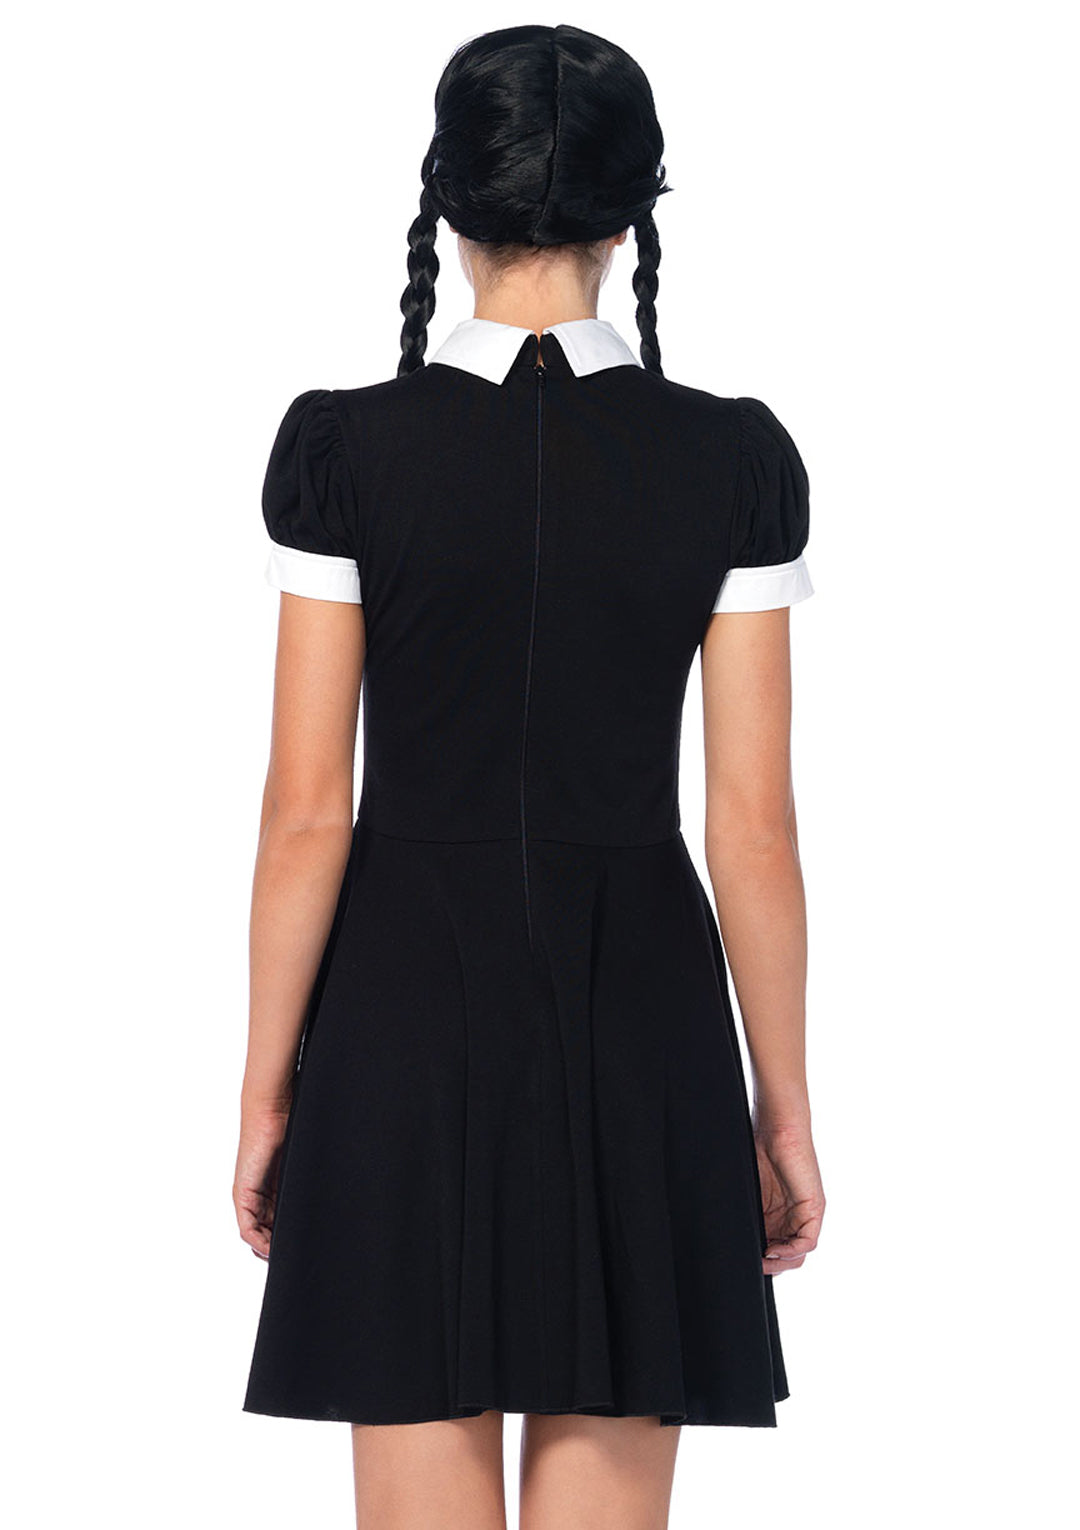 2-piece Gothic Darling,classic Collared Dress,braided Wig W/bows